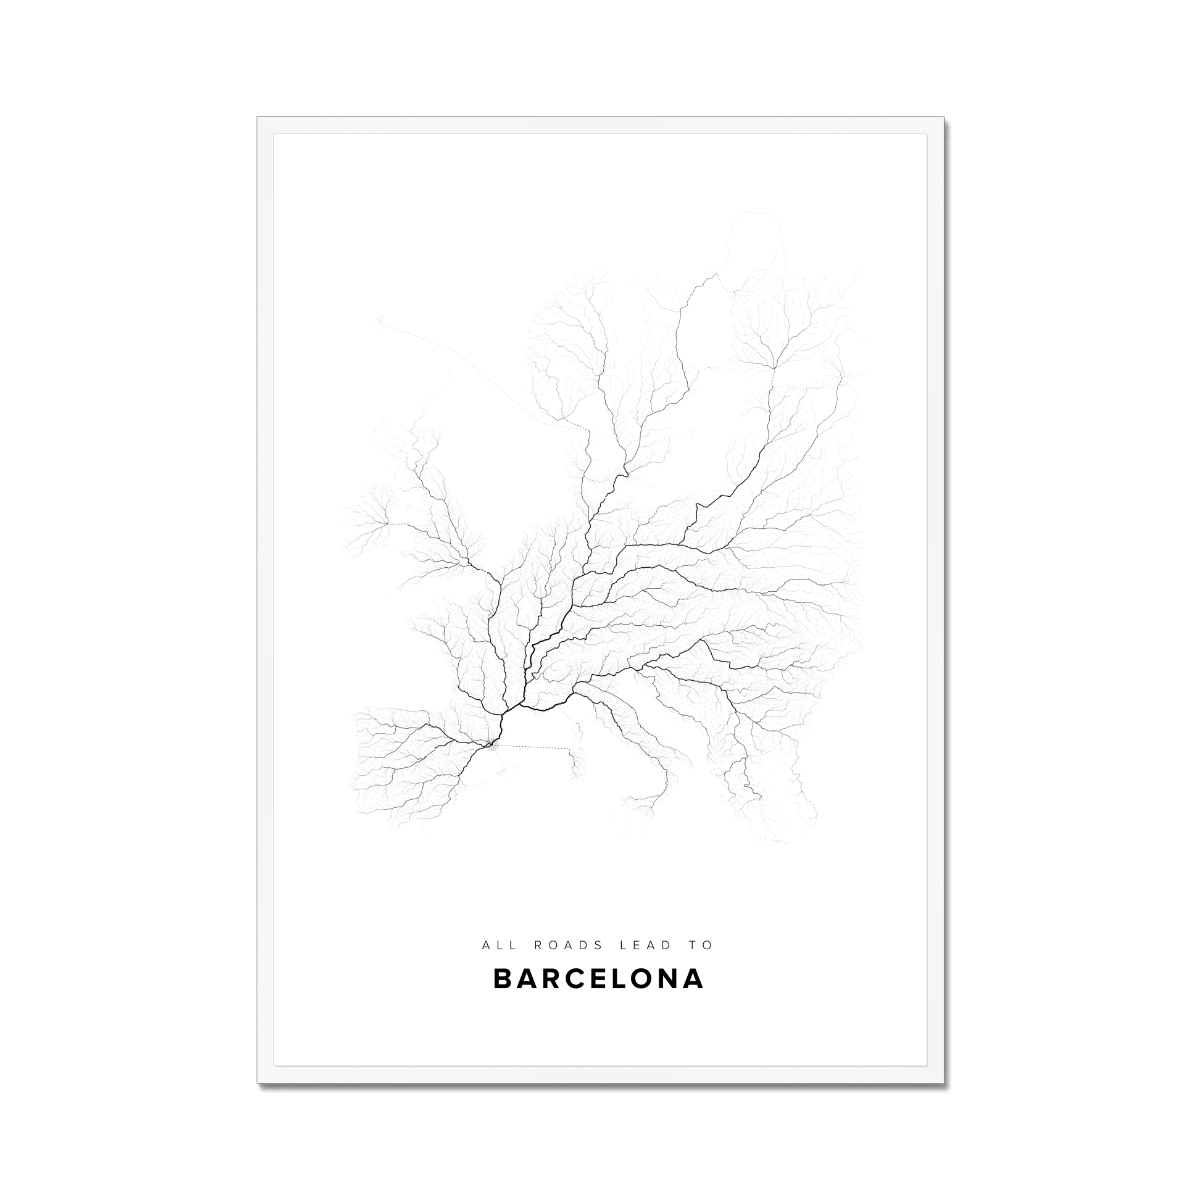 All roads lead to Barcelona (Spain) Fine Art Map Print